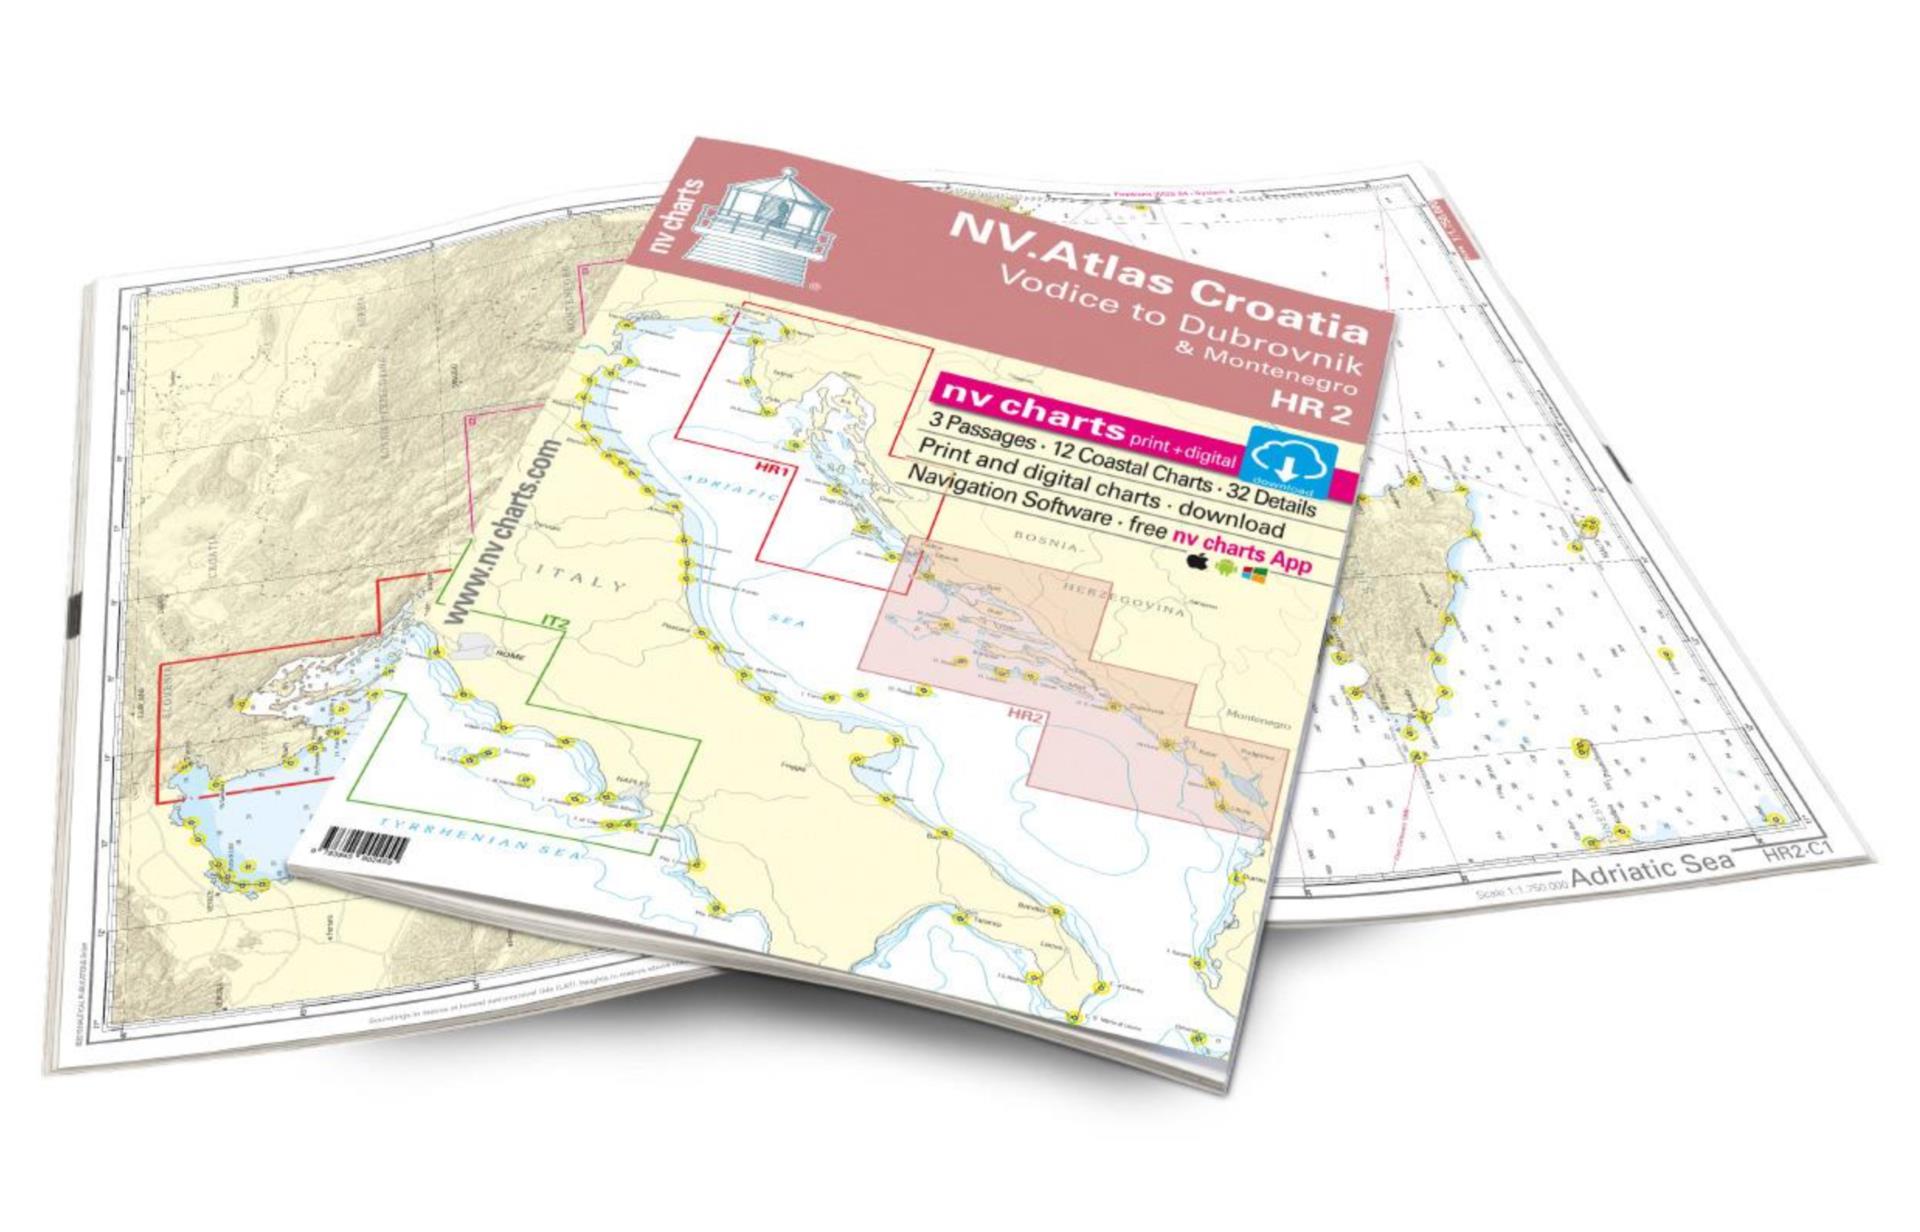 NV Atlas Croatia HR 2 - Vodice to Dubrovnik & Montenegro